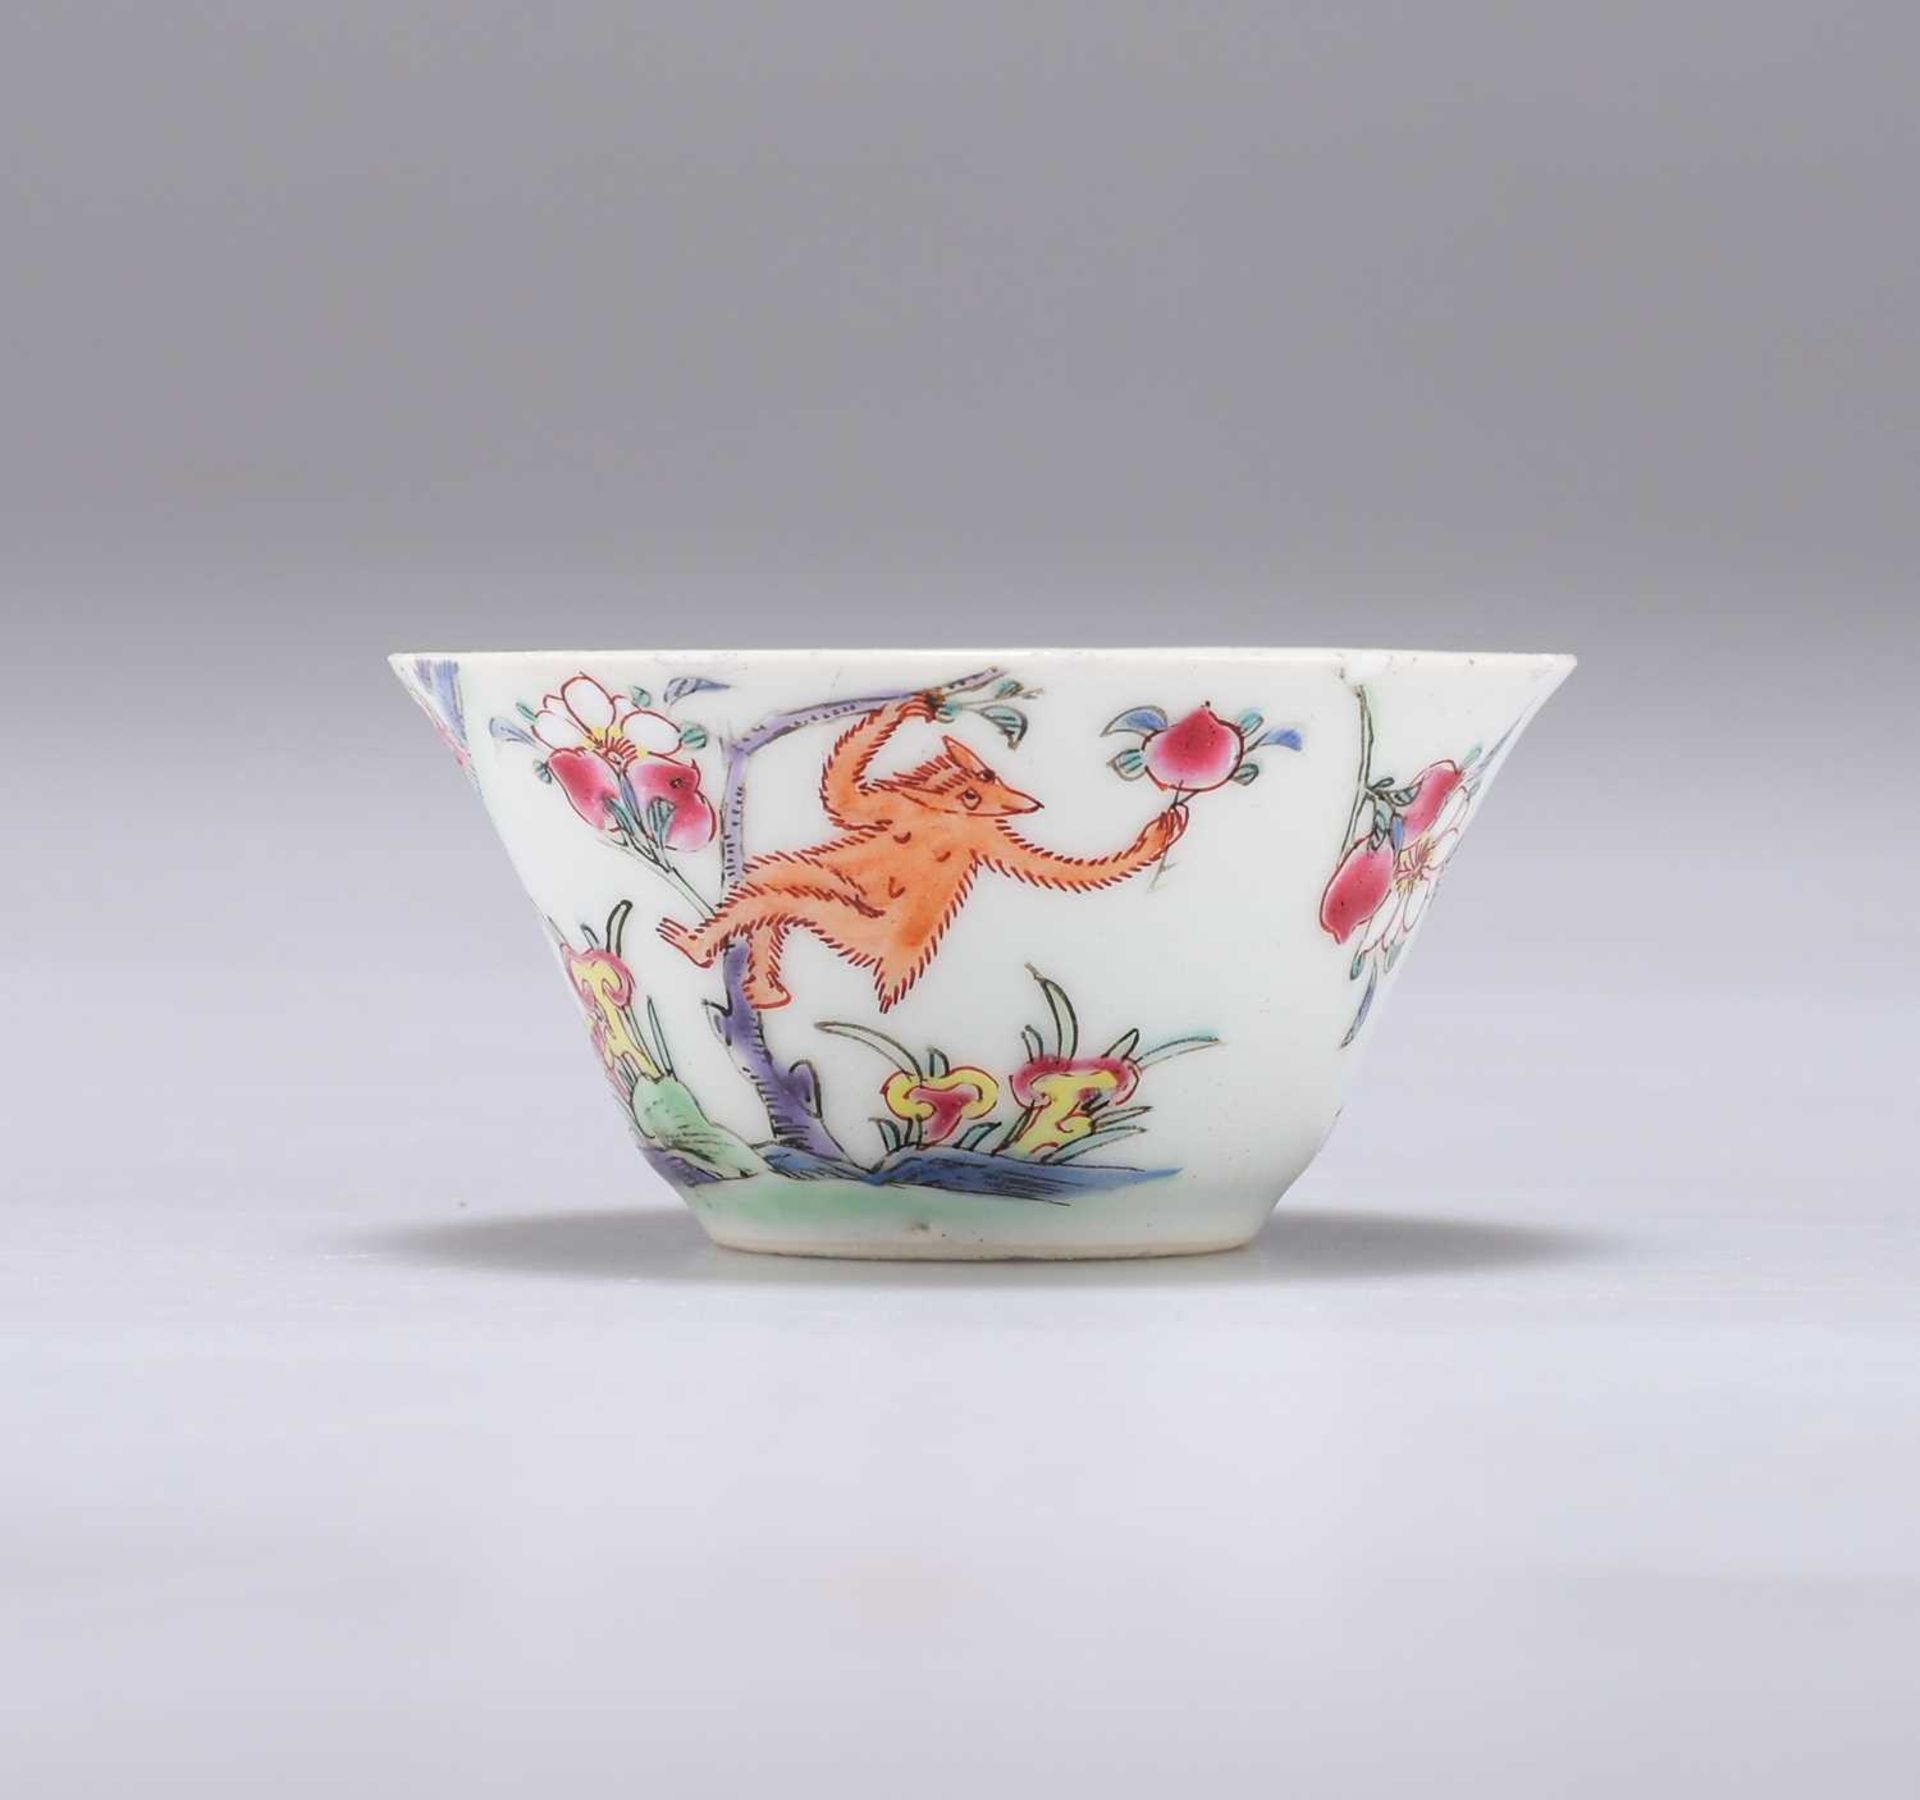 AN 18TH CENTURY CHINESE PORCELAIN TEA BOWL